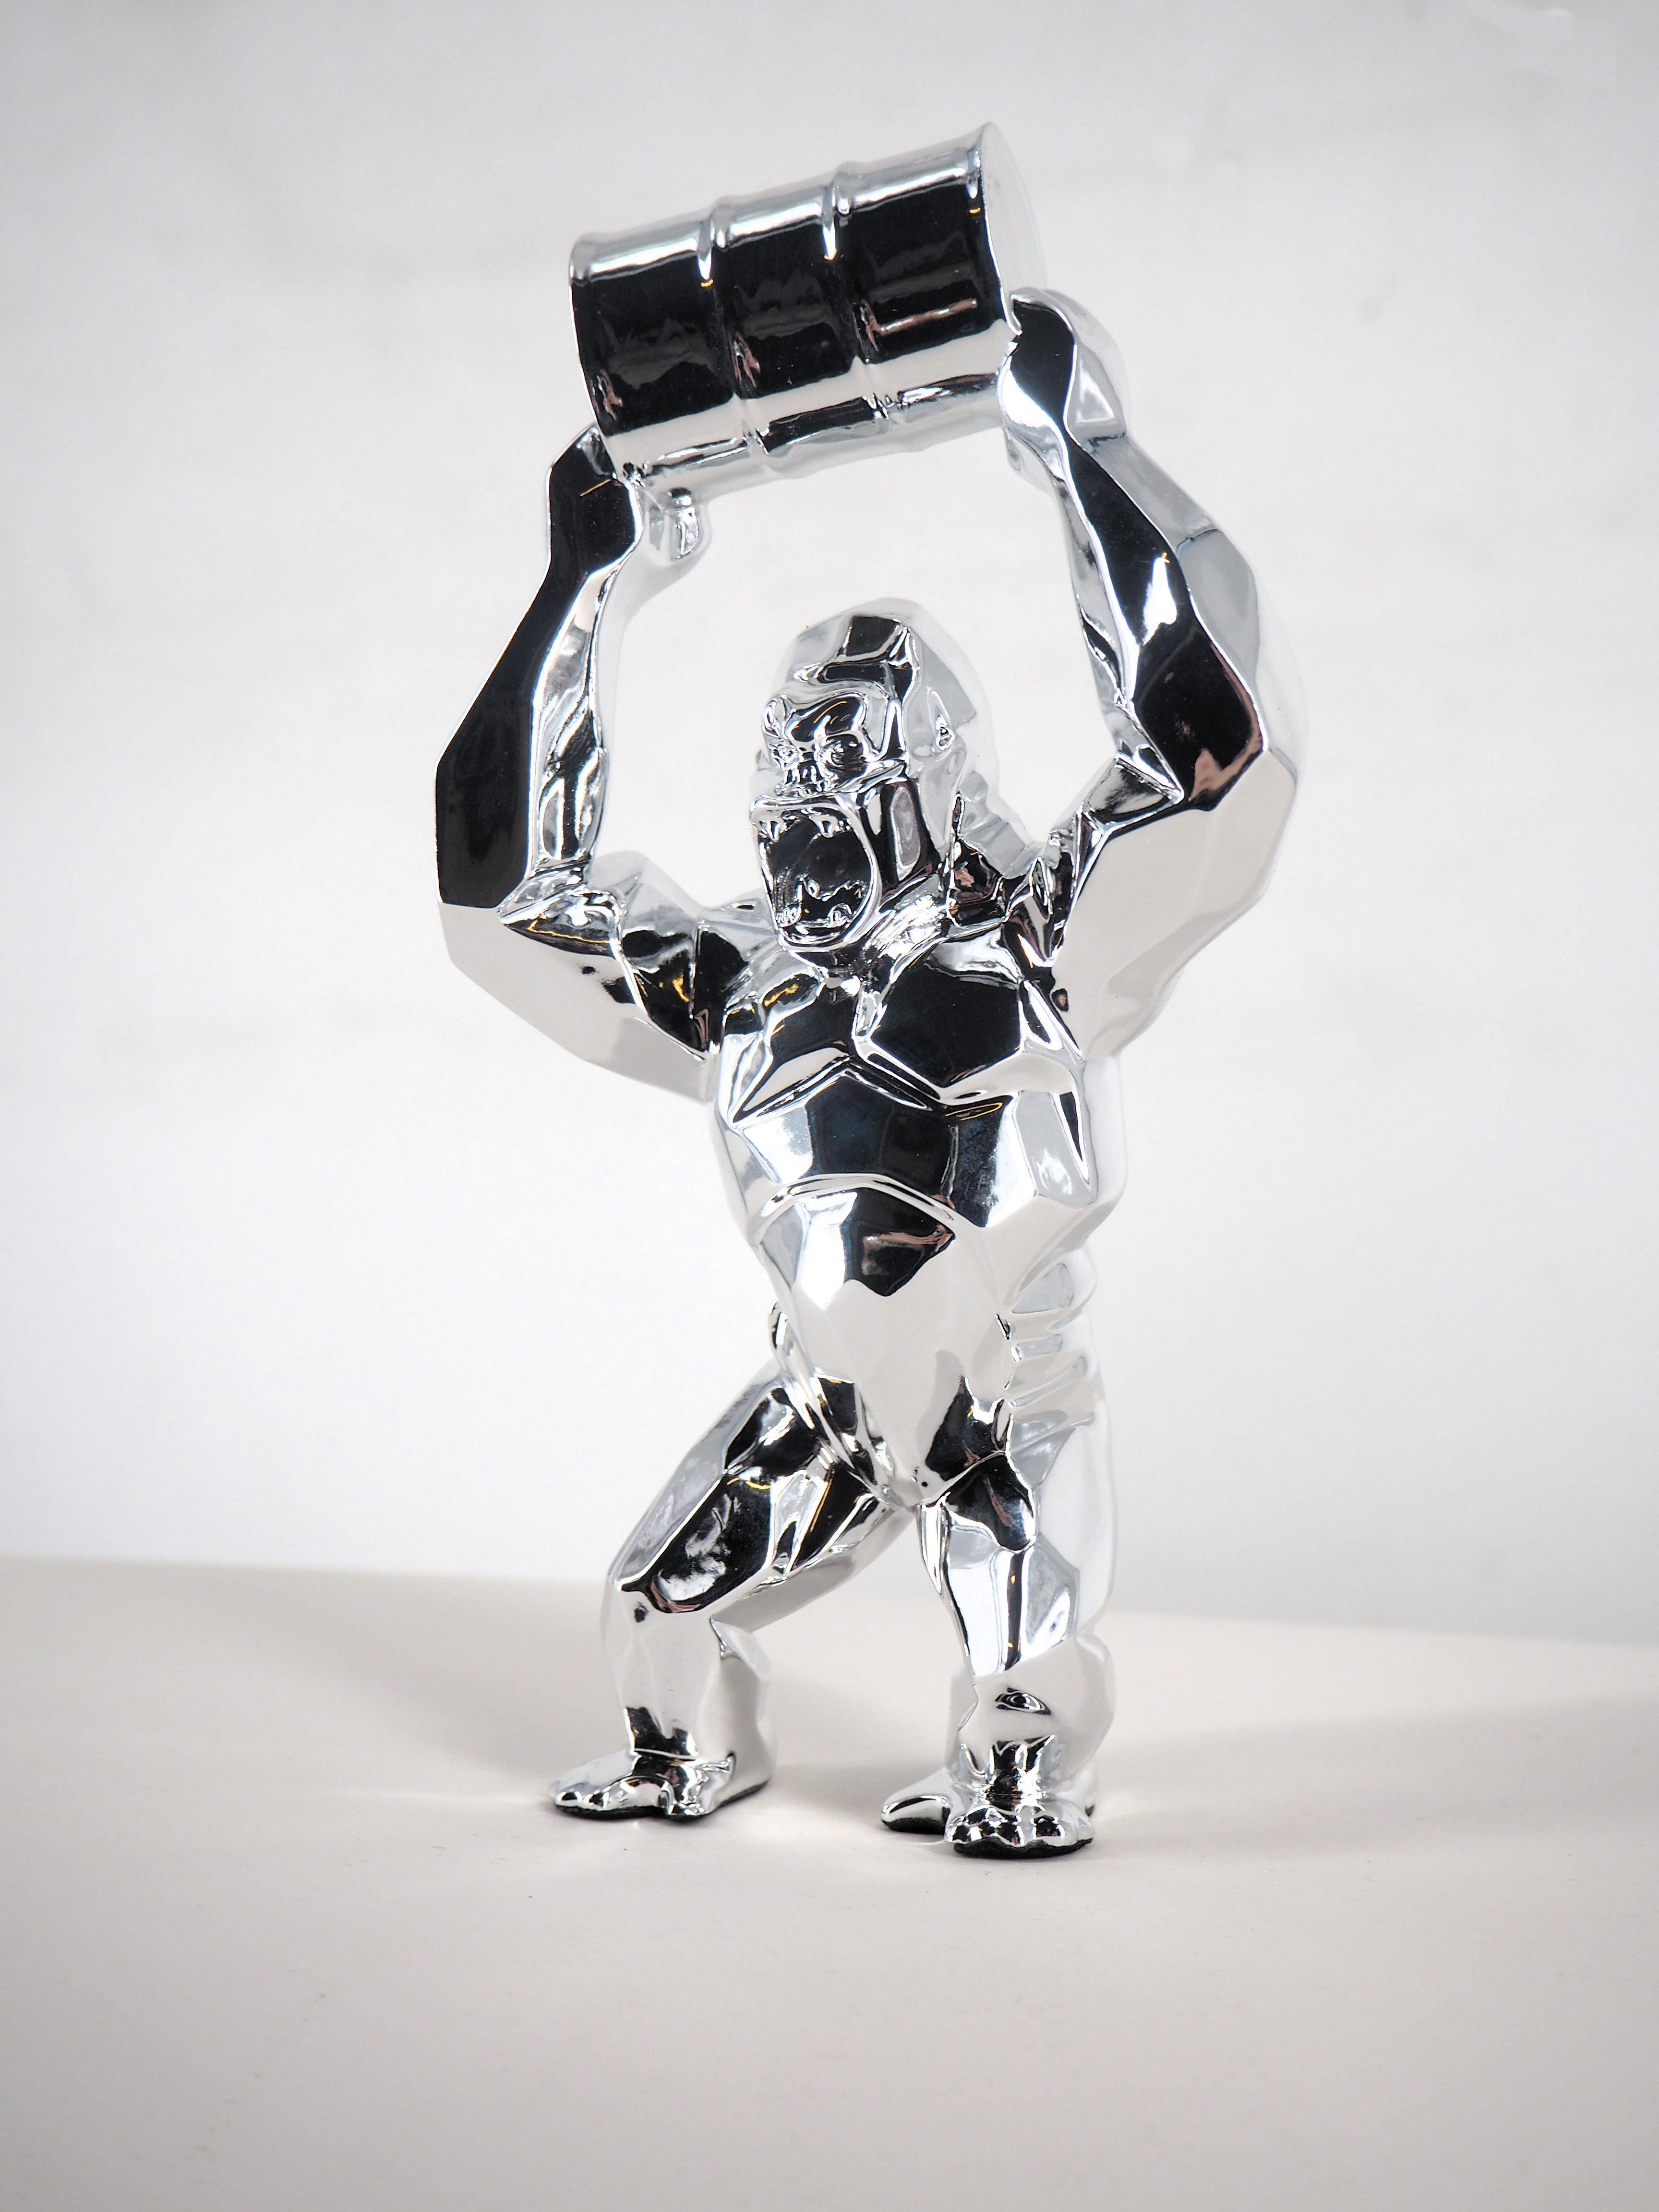 Kong Oil Spirit (Silver edition) - Sculpture in original box with artist coa